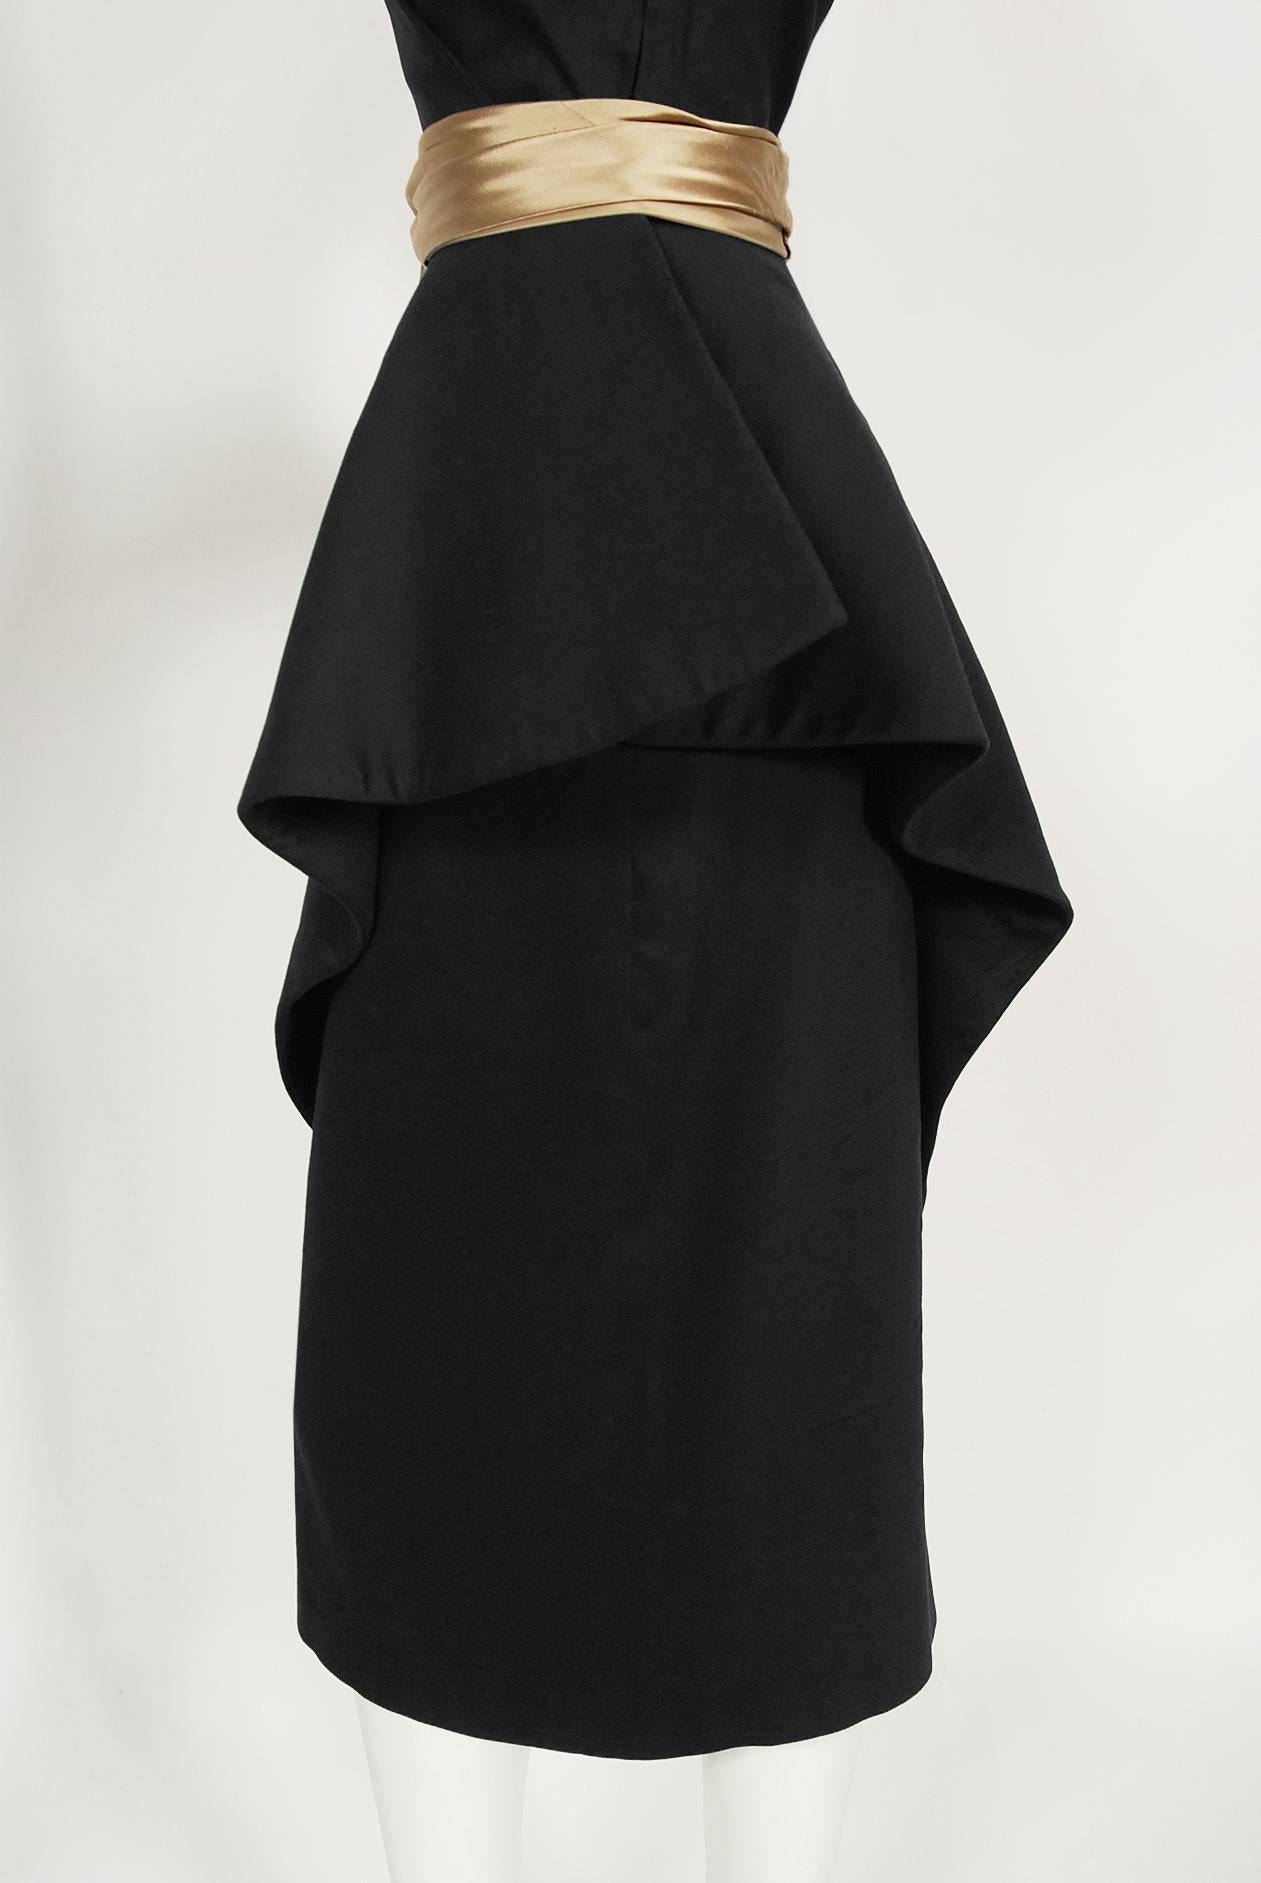 Vintage 1949 Lanvin Haute Couture Documented Sculpted Black Wool Cocktail Dress 7